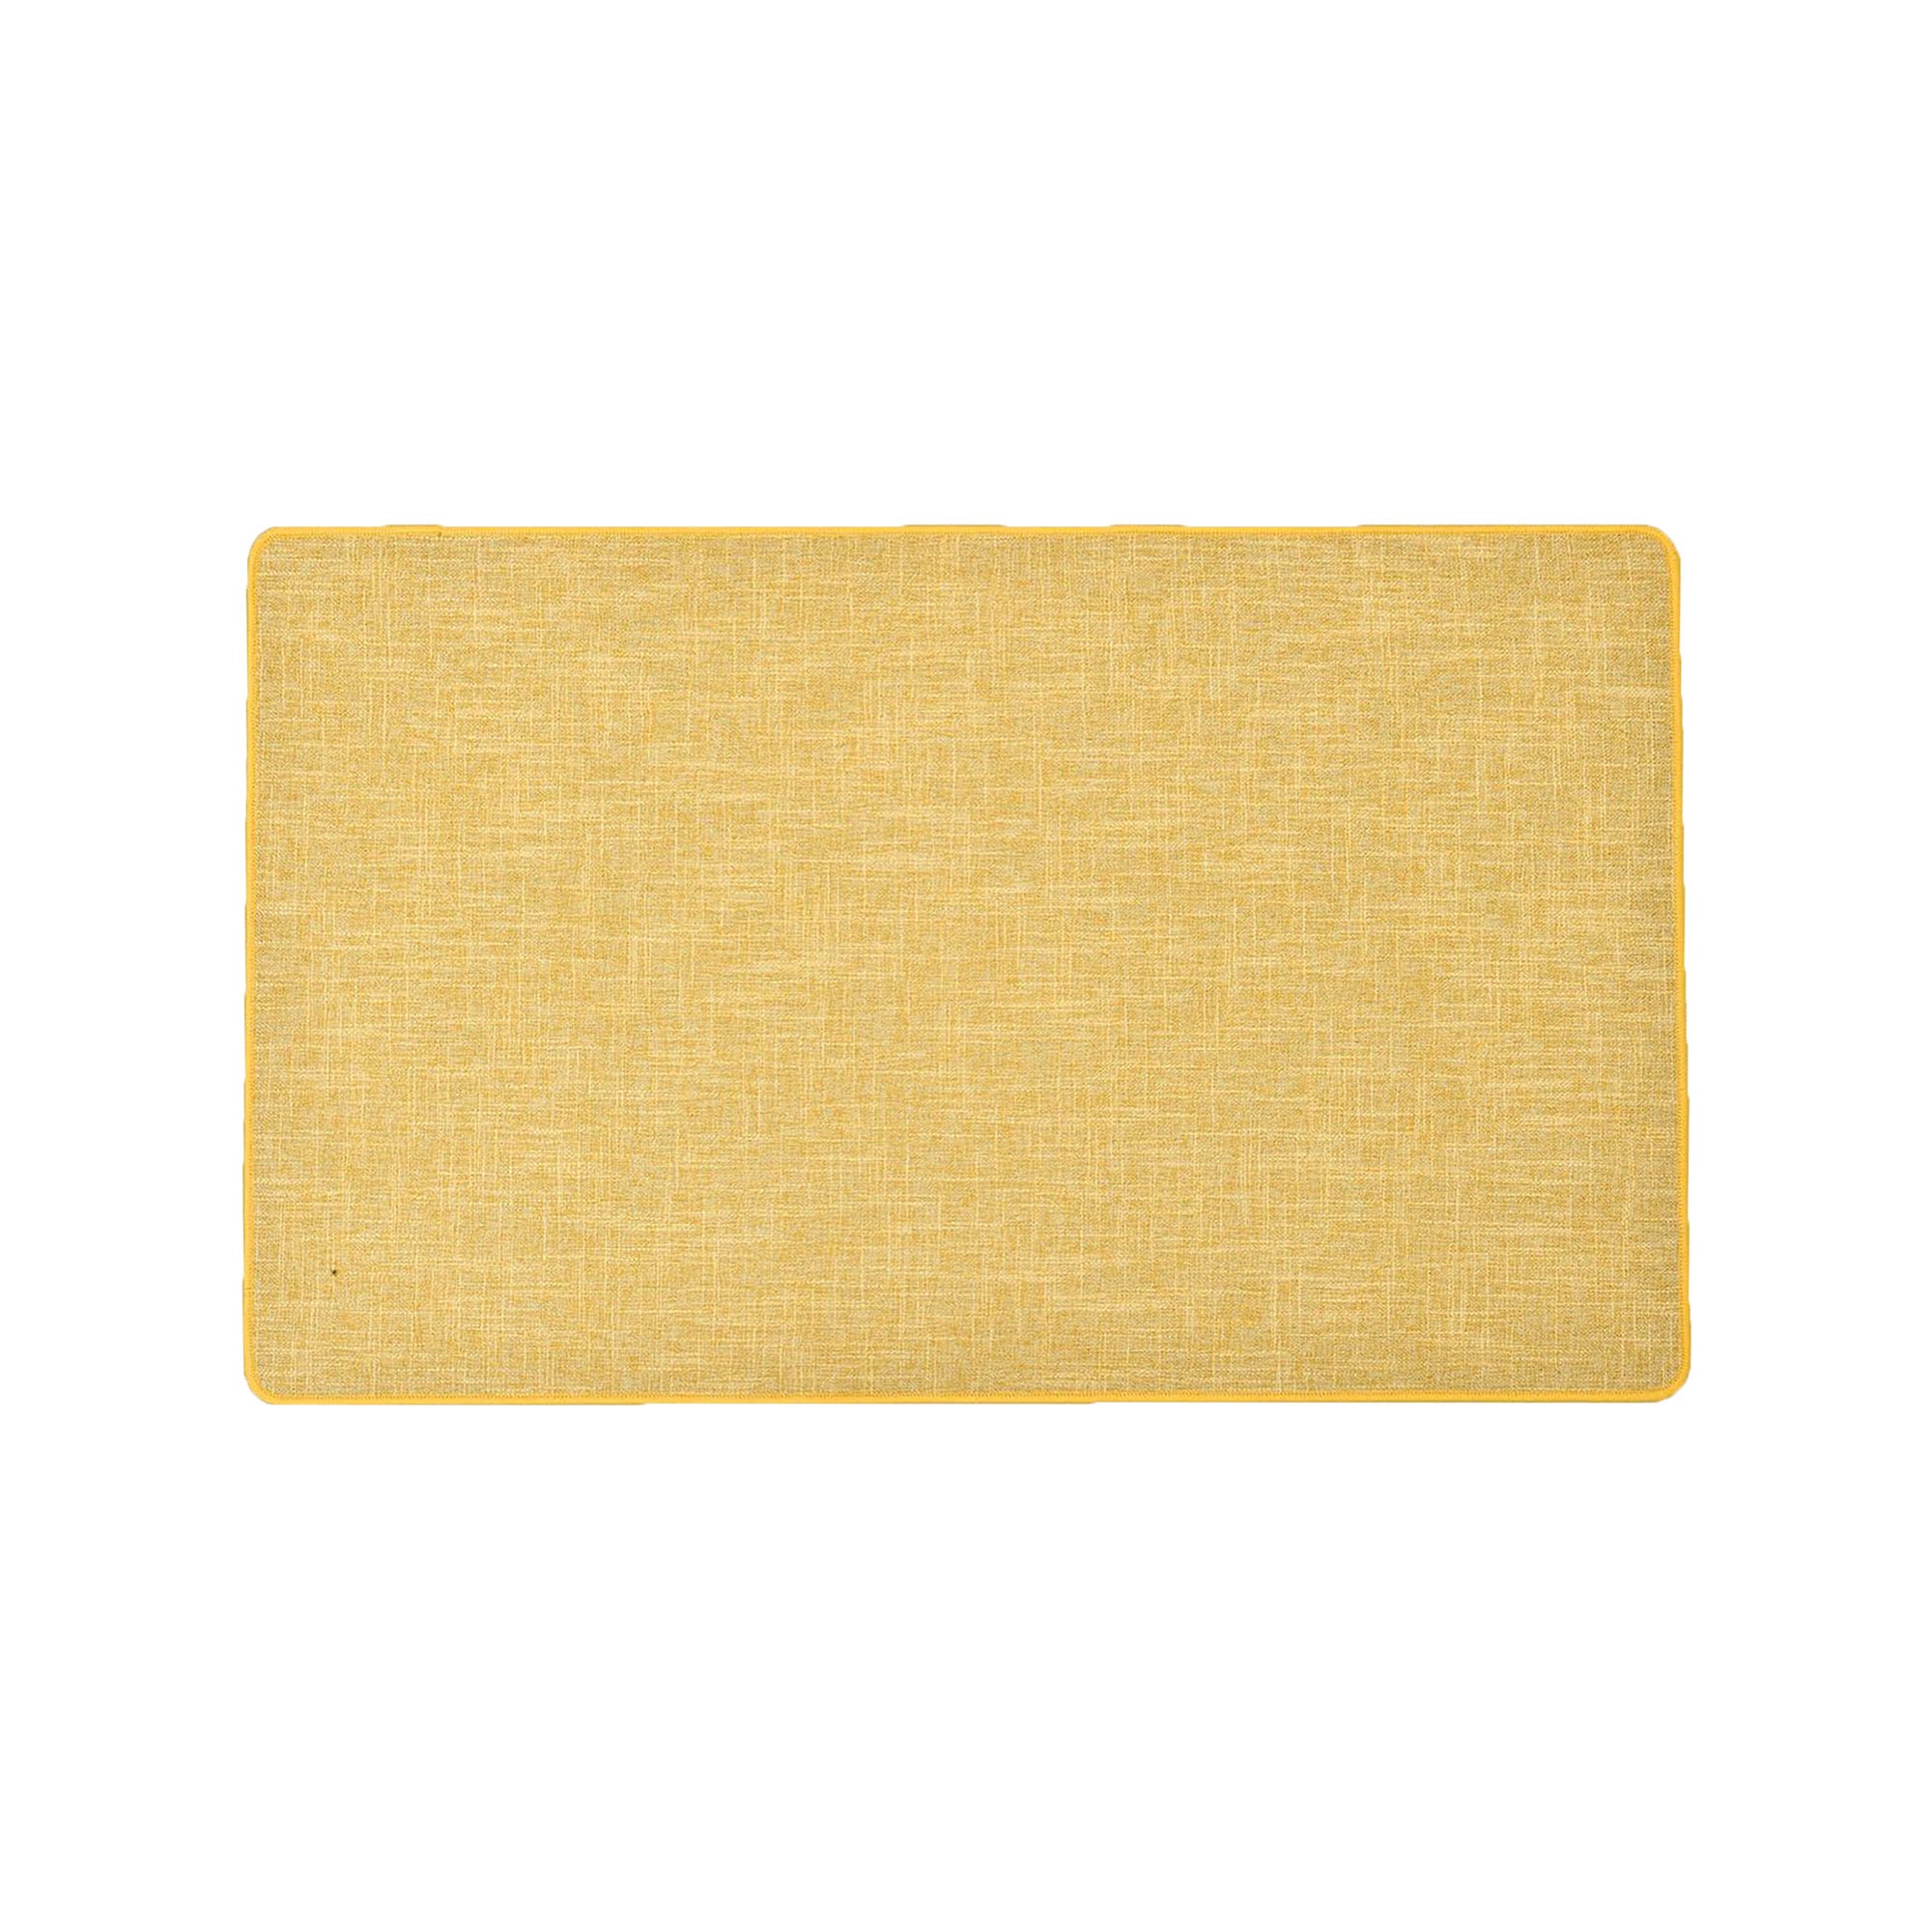 Joletta 2 Piece Anti-Fatigue Mat Set Union Rustic Color: Yellow/Gold